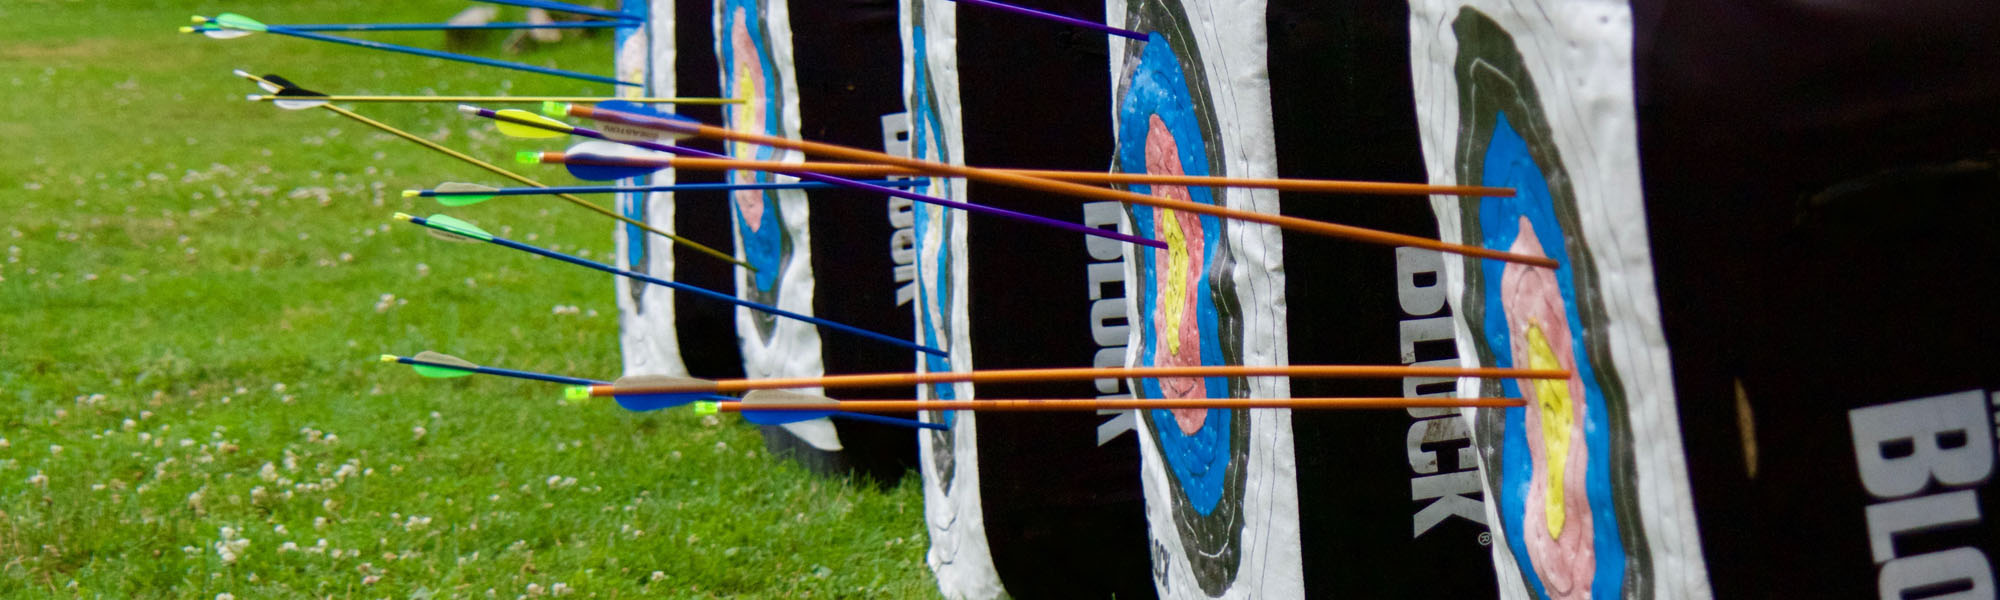 Arrows in Targets